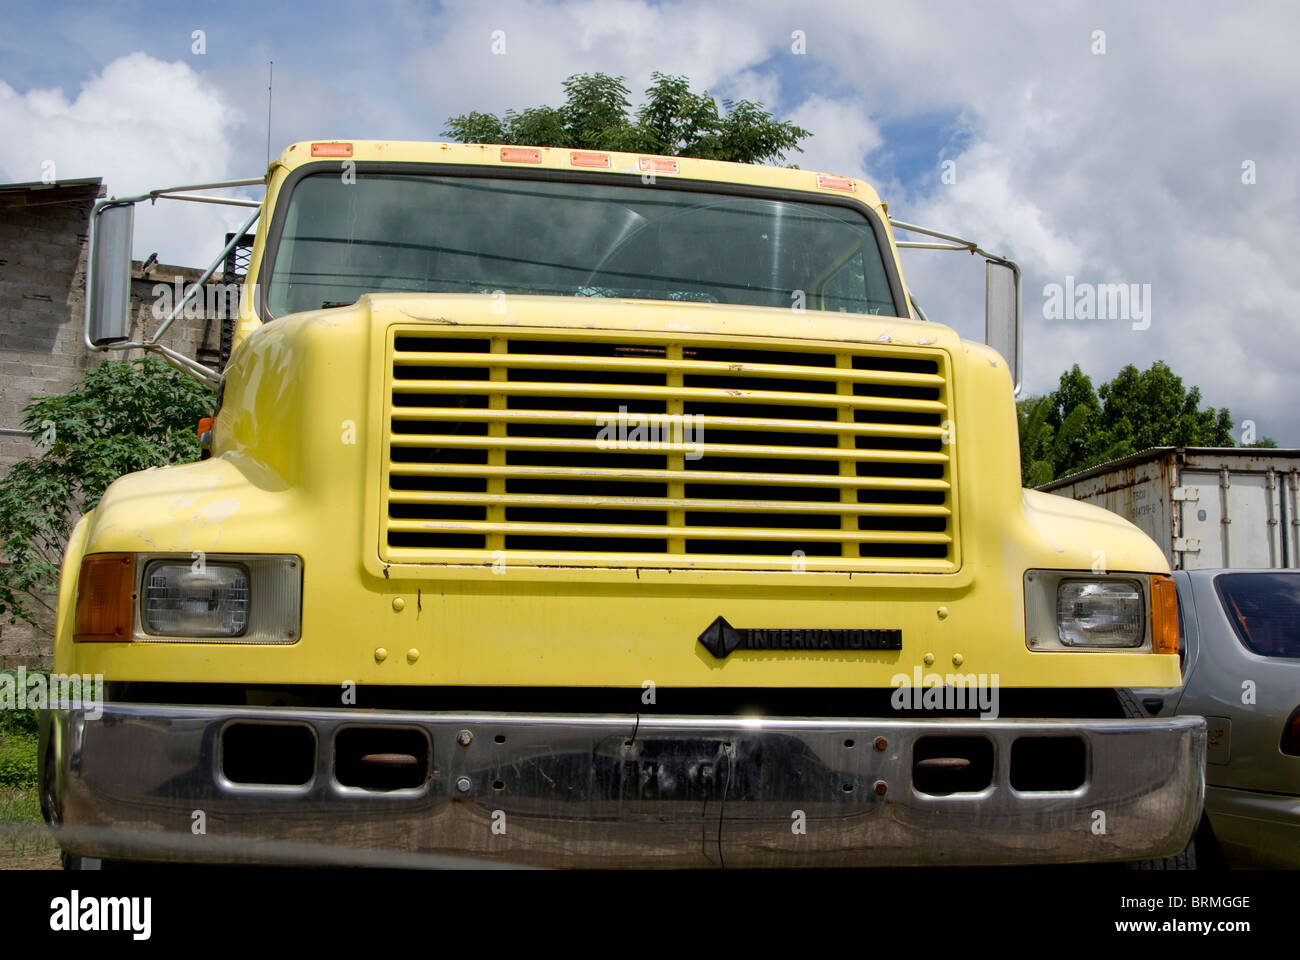 Camion internacional fotografías e imágenes de alta resolución - Alamy